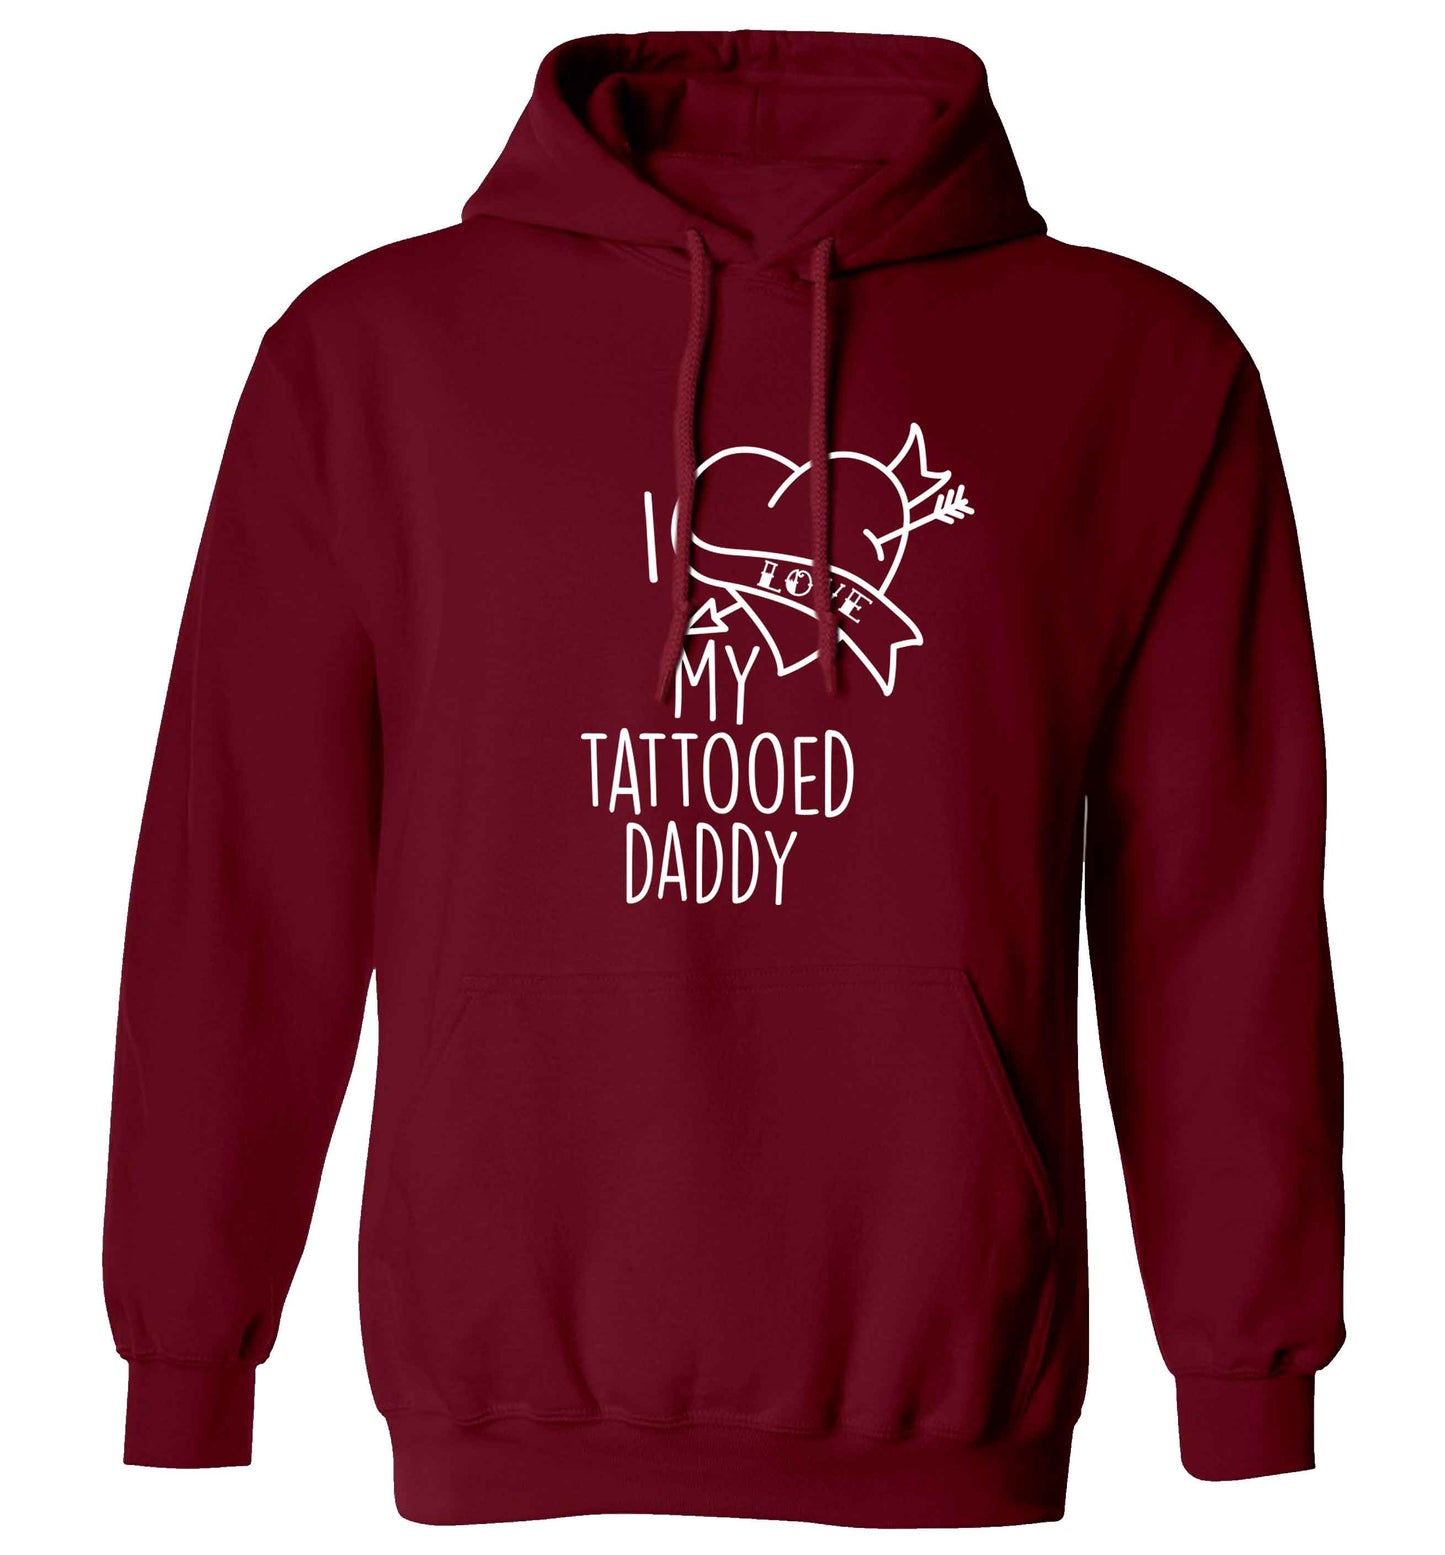 I love my tattooed daddy adults unisex maroon hoodie 2XL